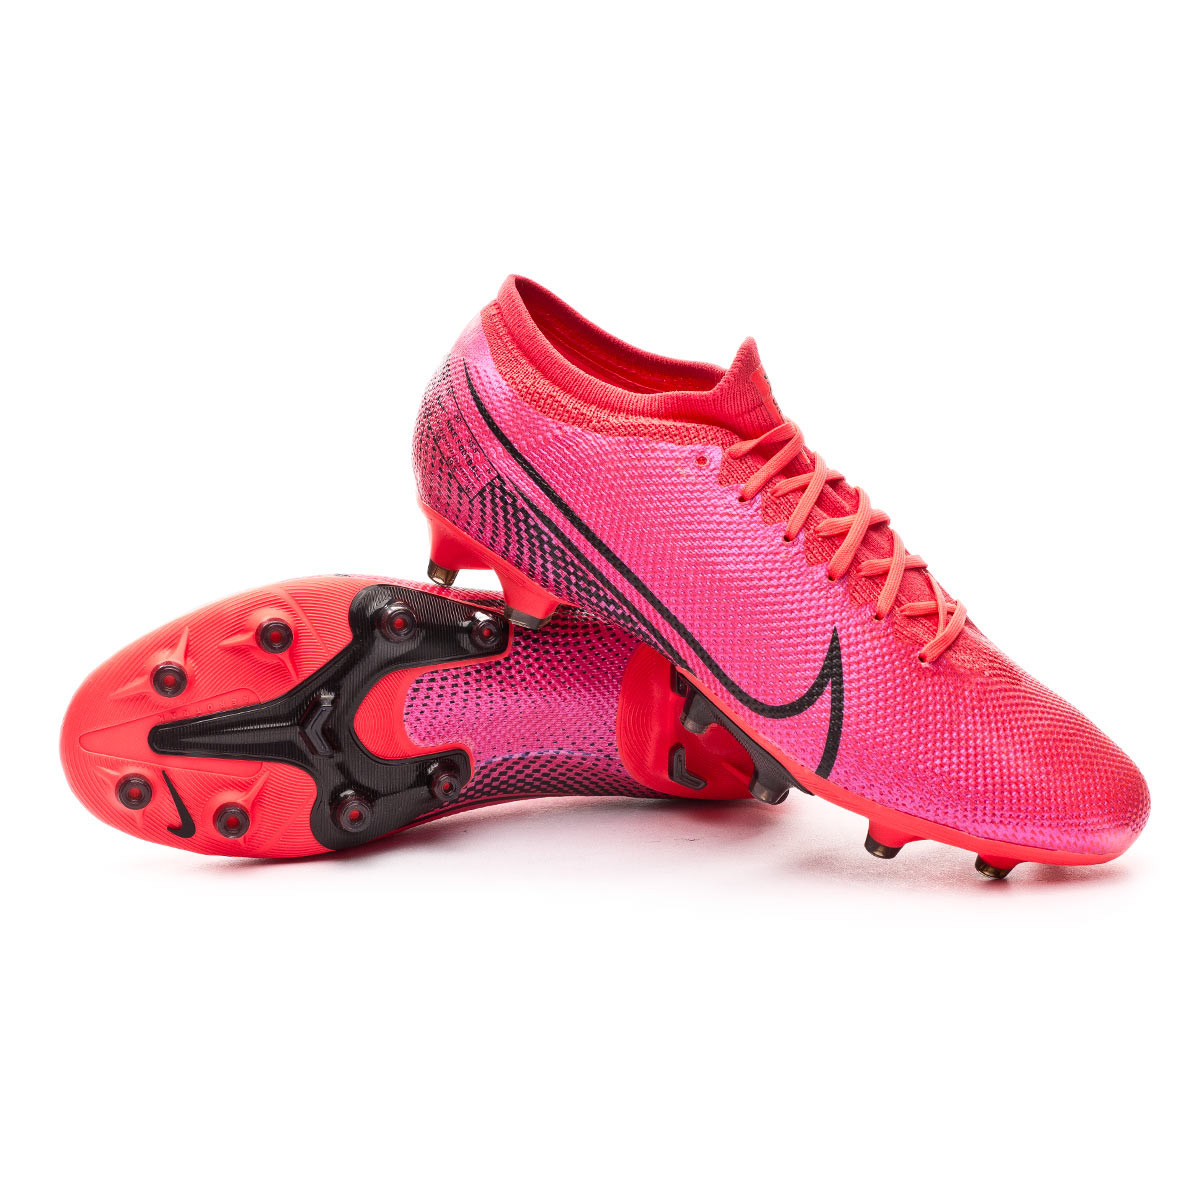 Nike Vapor 13 Elite Tech Craft FG Football boots for men